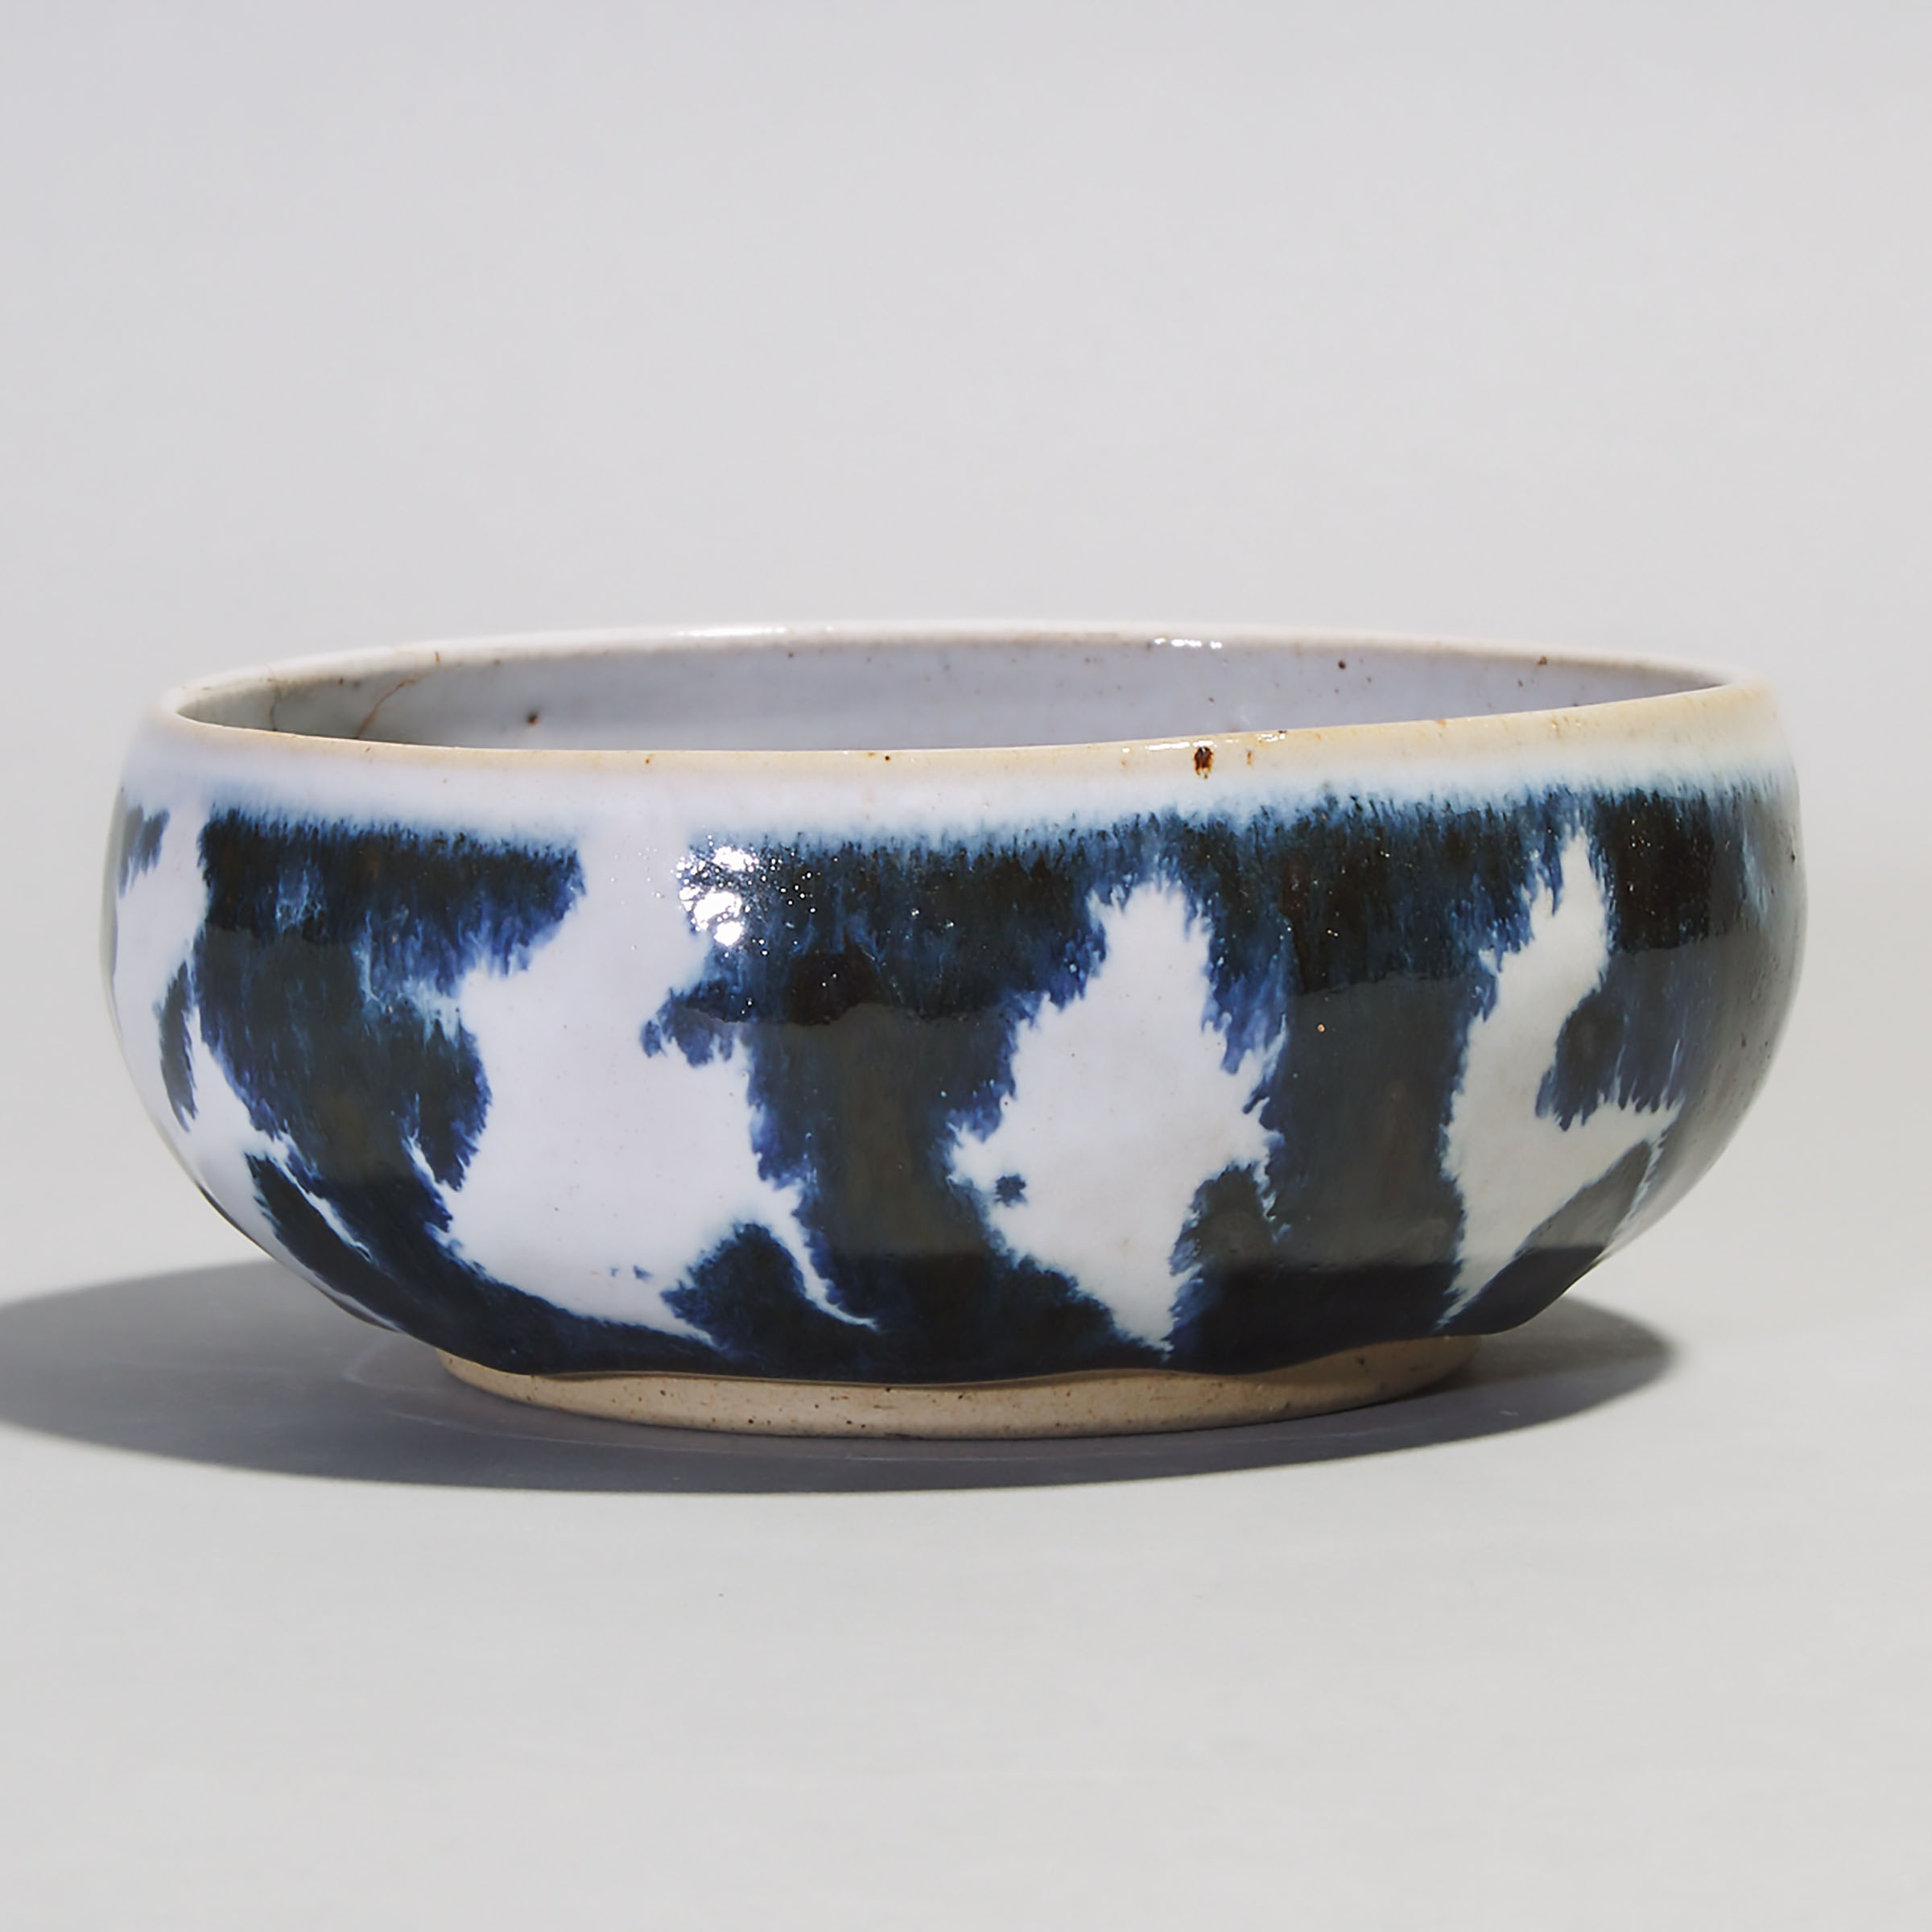 Tessa Kidick (Canadian), Small Stoneware Bowl, c.1970